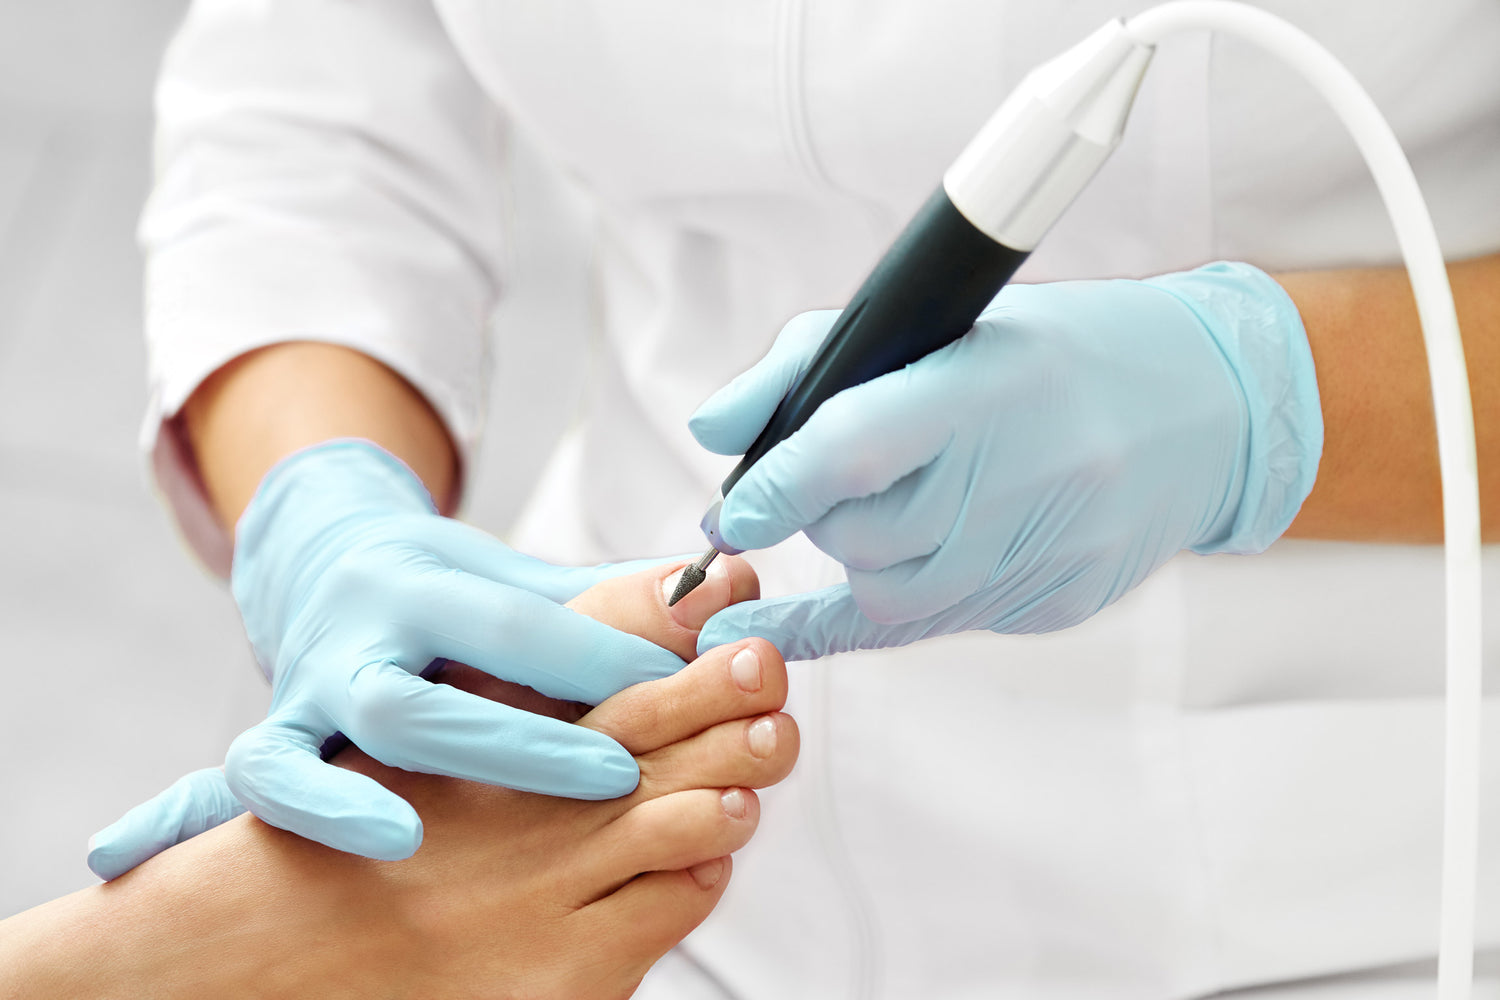 Podiatrist debriding a toenail using a diamond bur